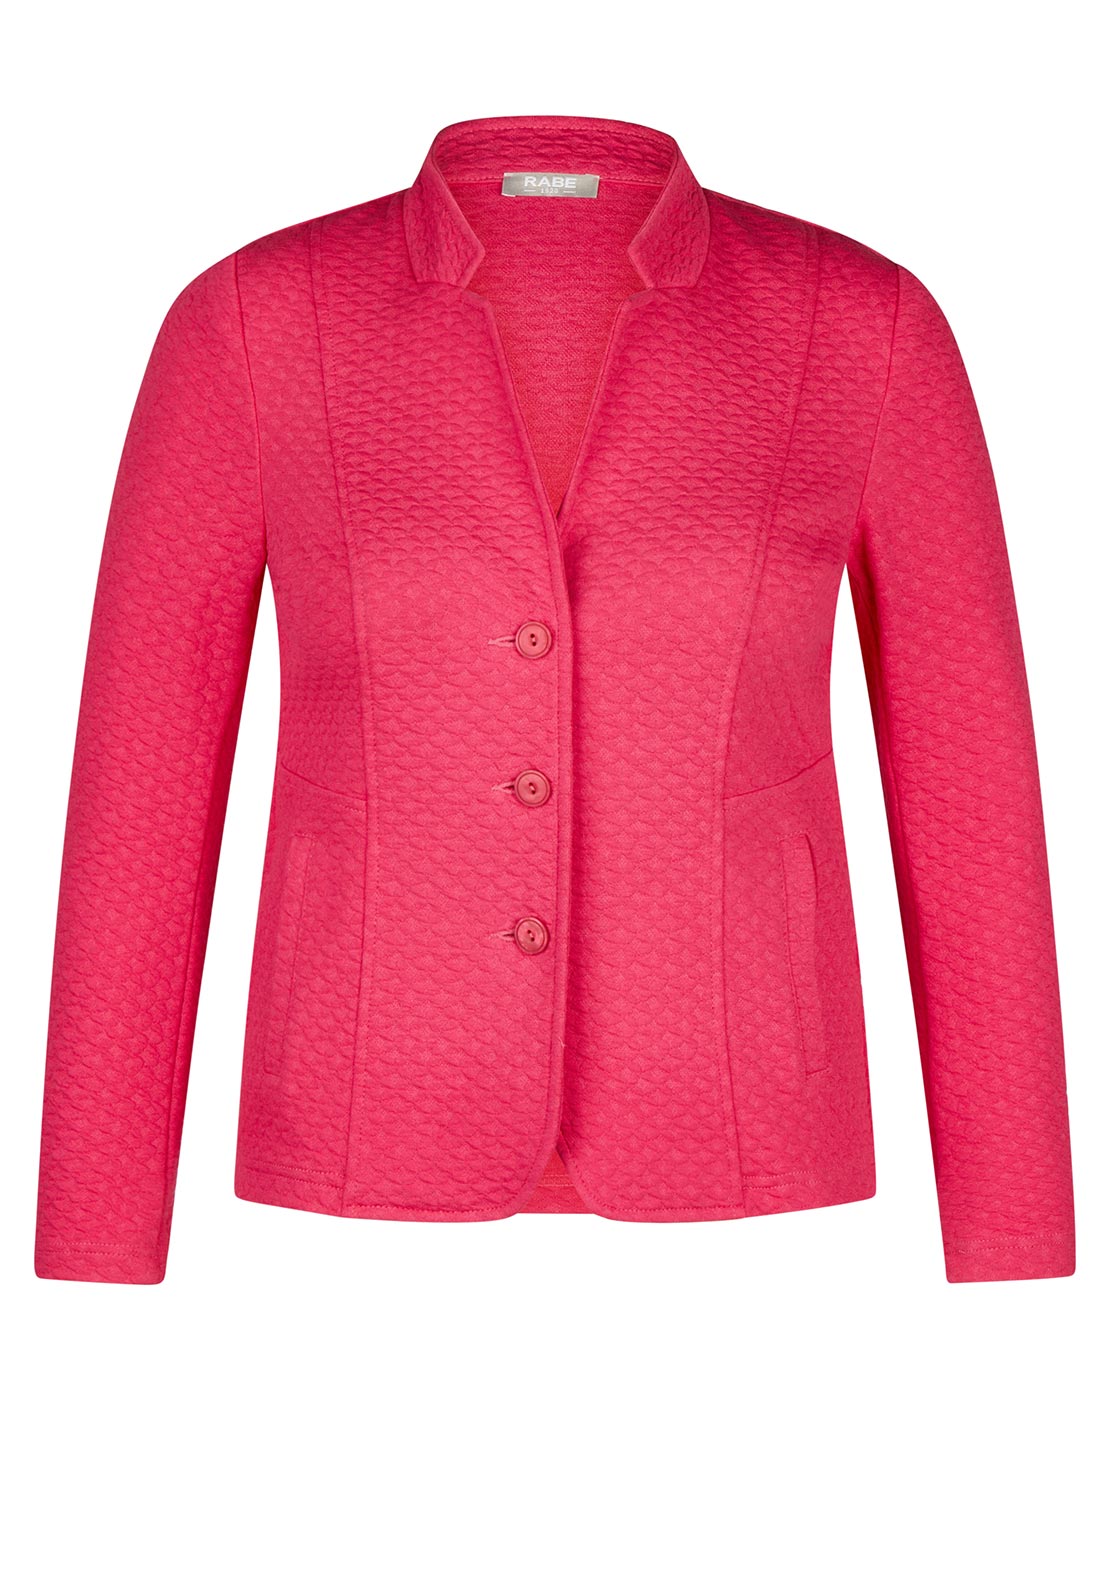 Rabe Textured Knit Short Fuchsia McElhinneys - Jacket